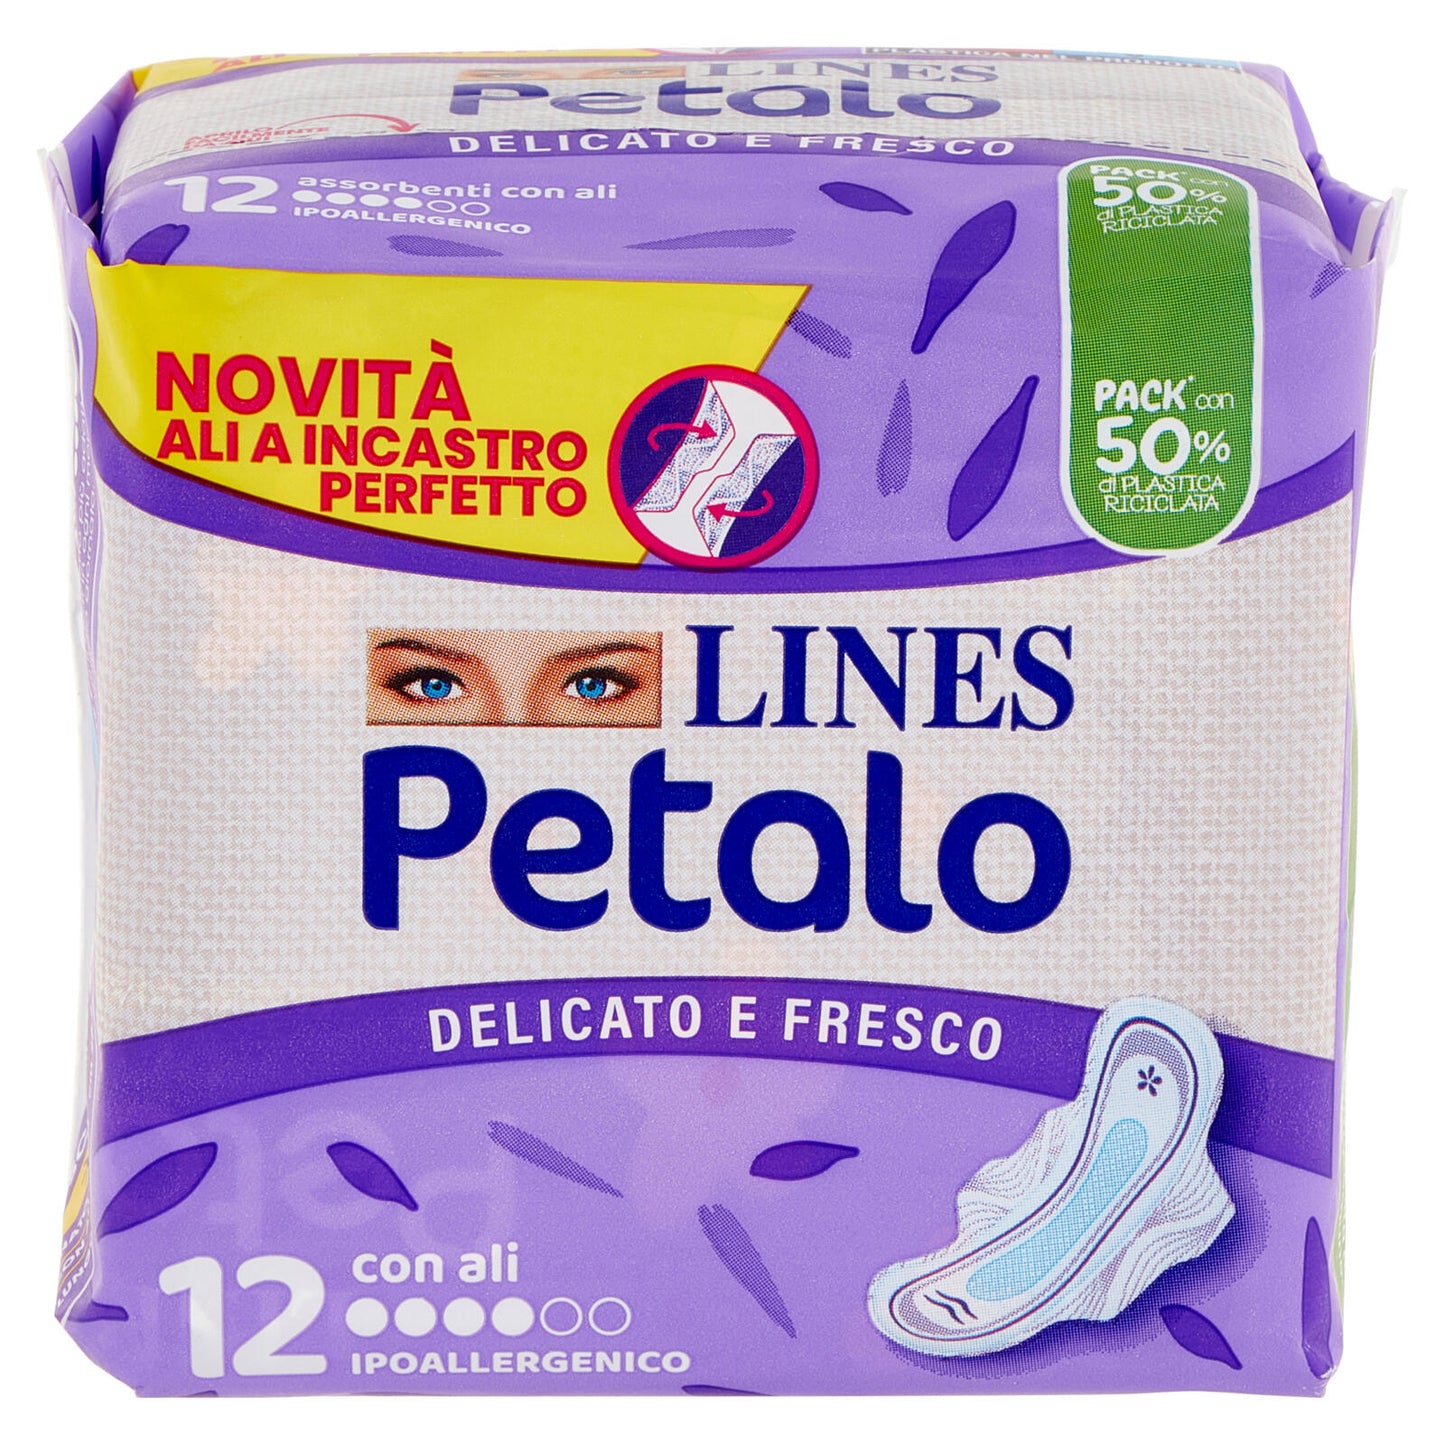 Lines Petalo con ali 12 pz